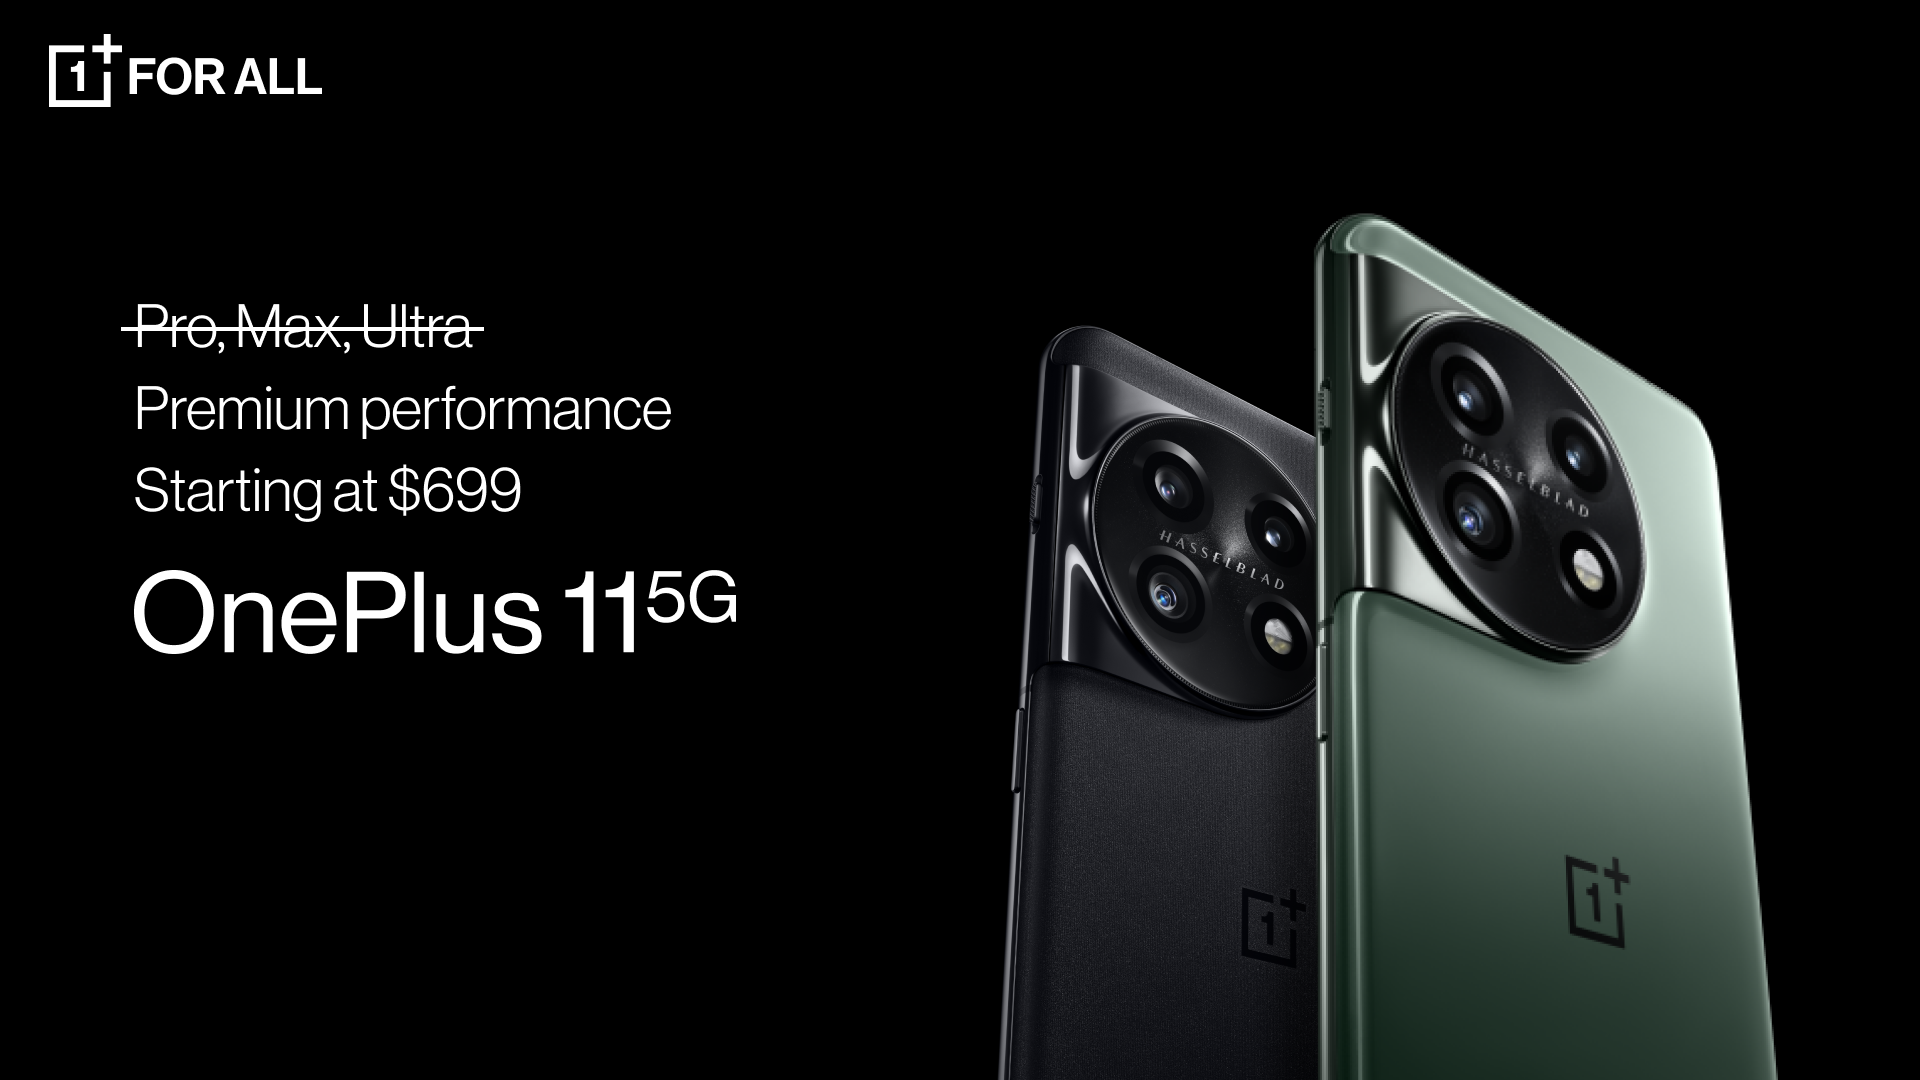 OnePlus 11 5G Promotional Image